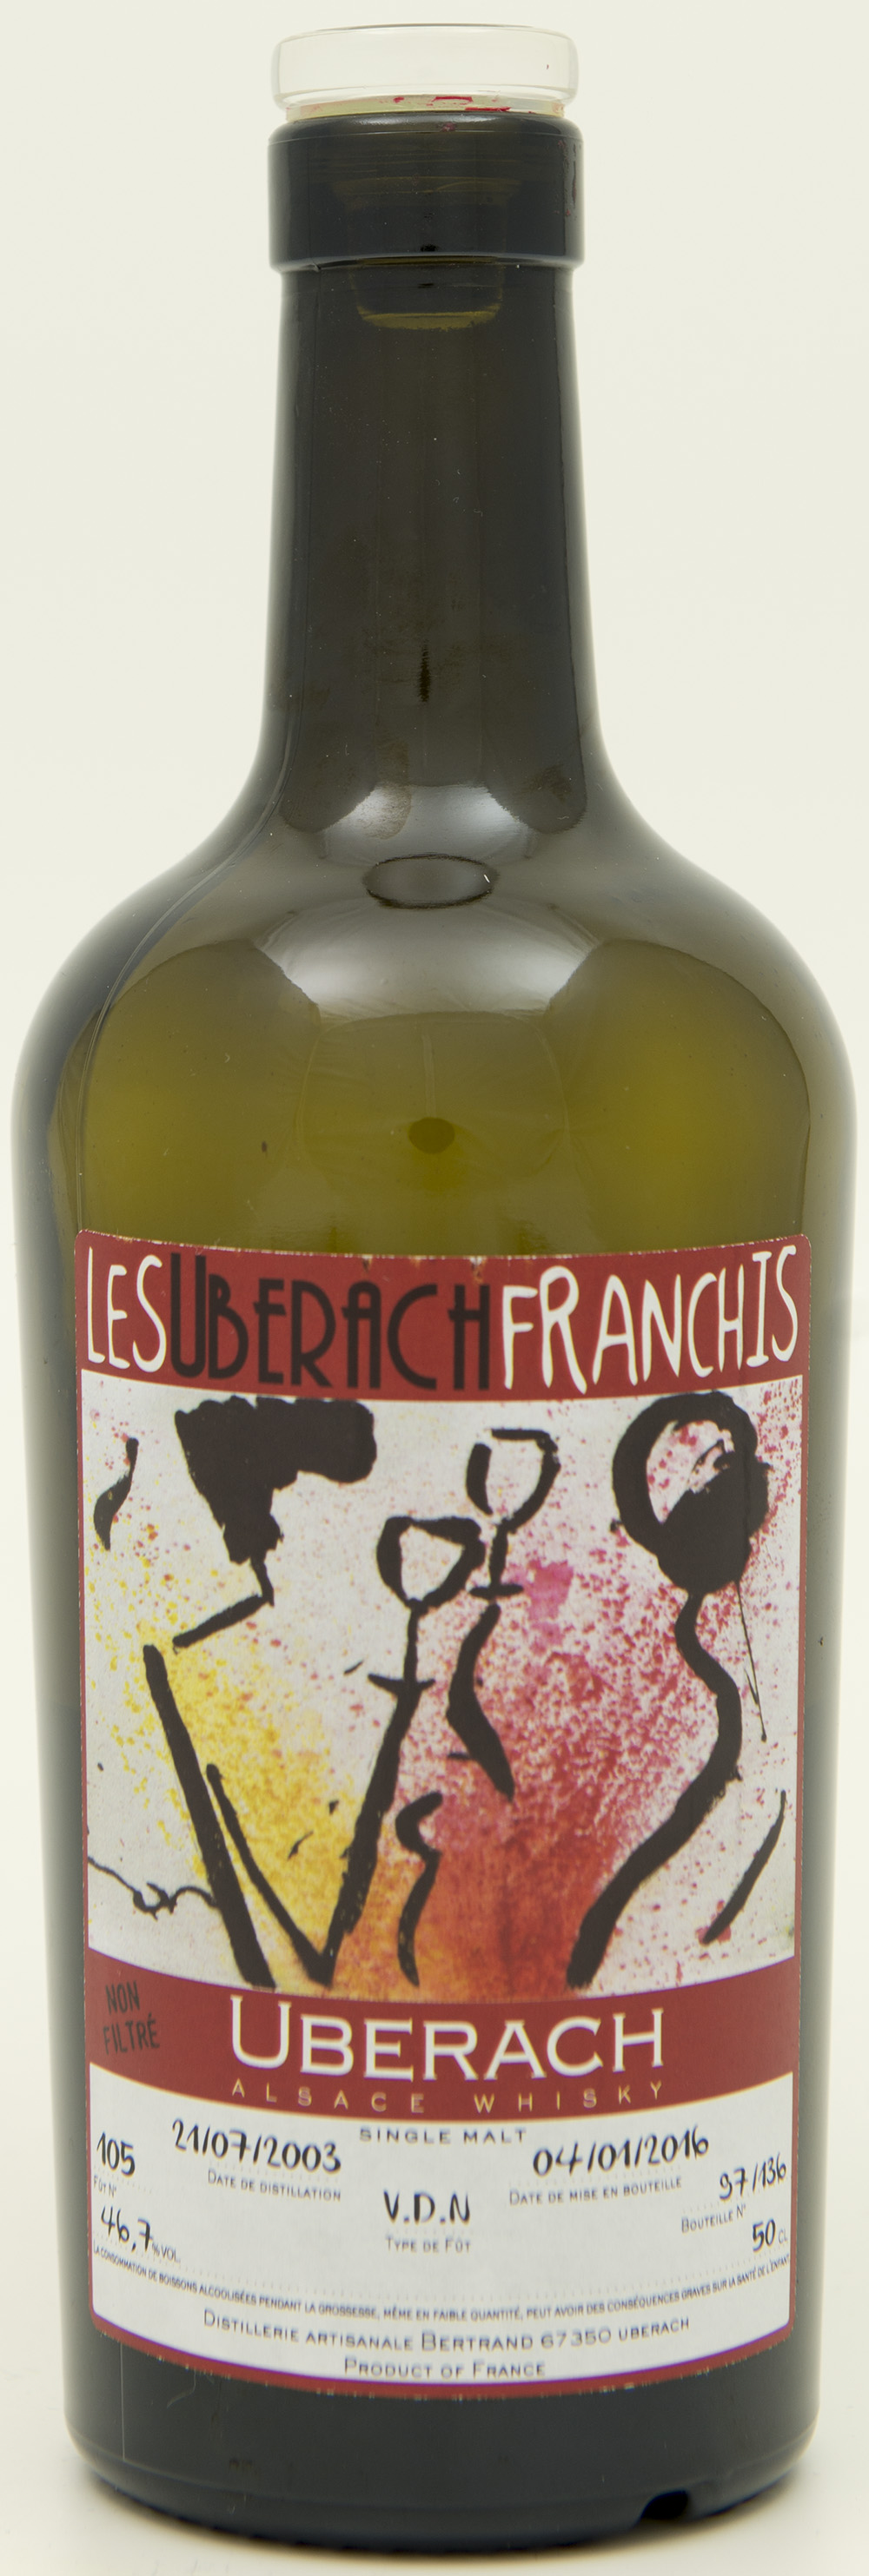 Billede: DSC_1118 - Uberach Alsace whisky - bottle front.jpg